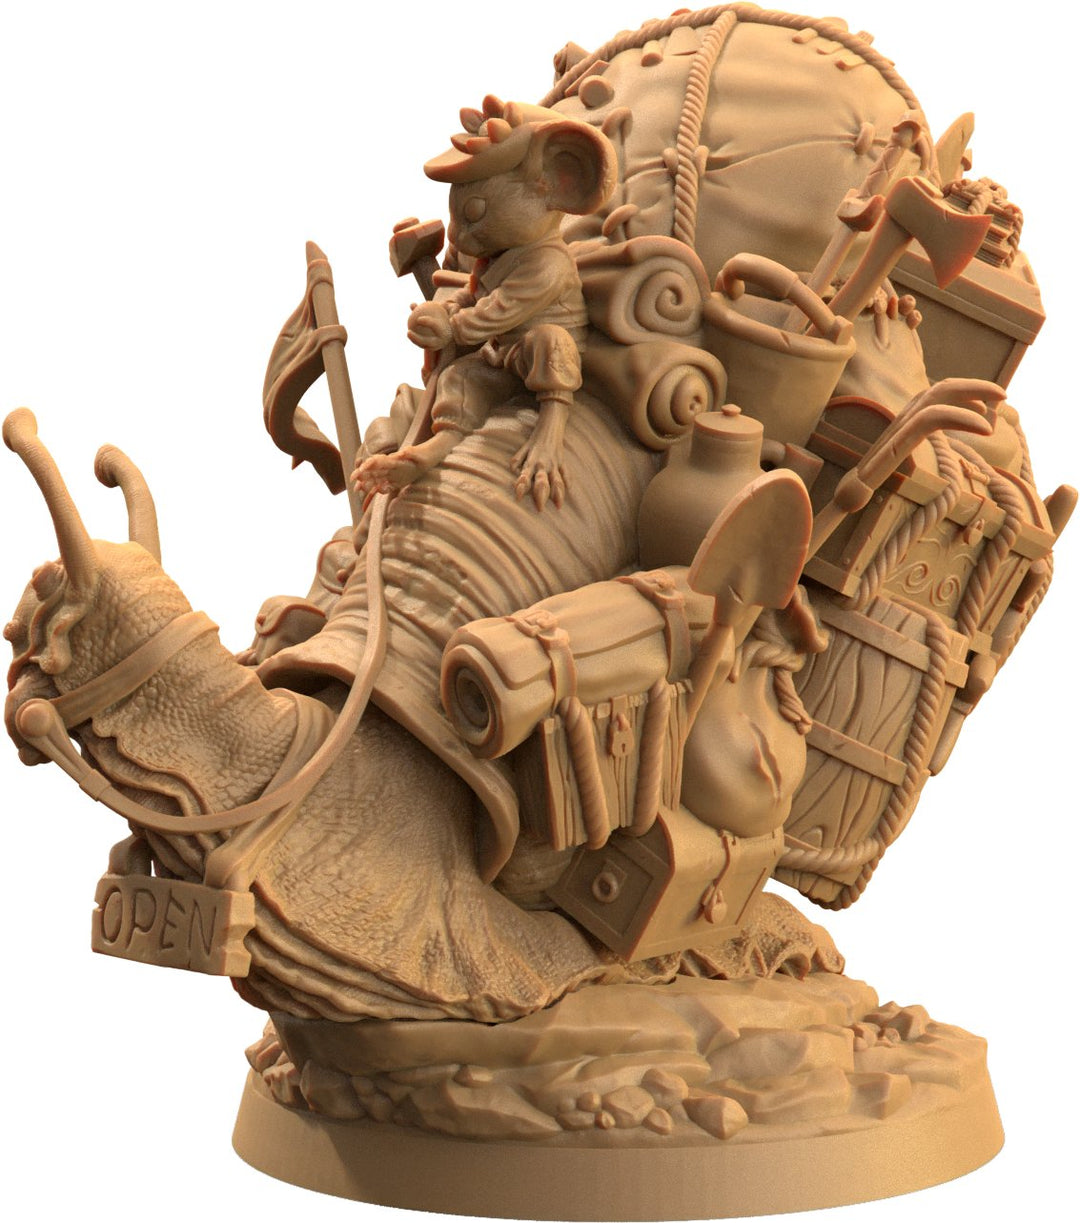 Thimbles Squeakerson traveling merchant - Mouse folk merchant on Giant Snail miniature - Mini Megastore